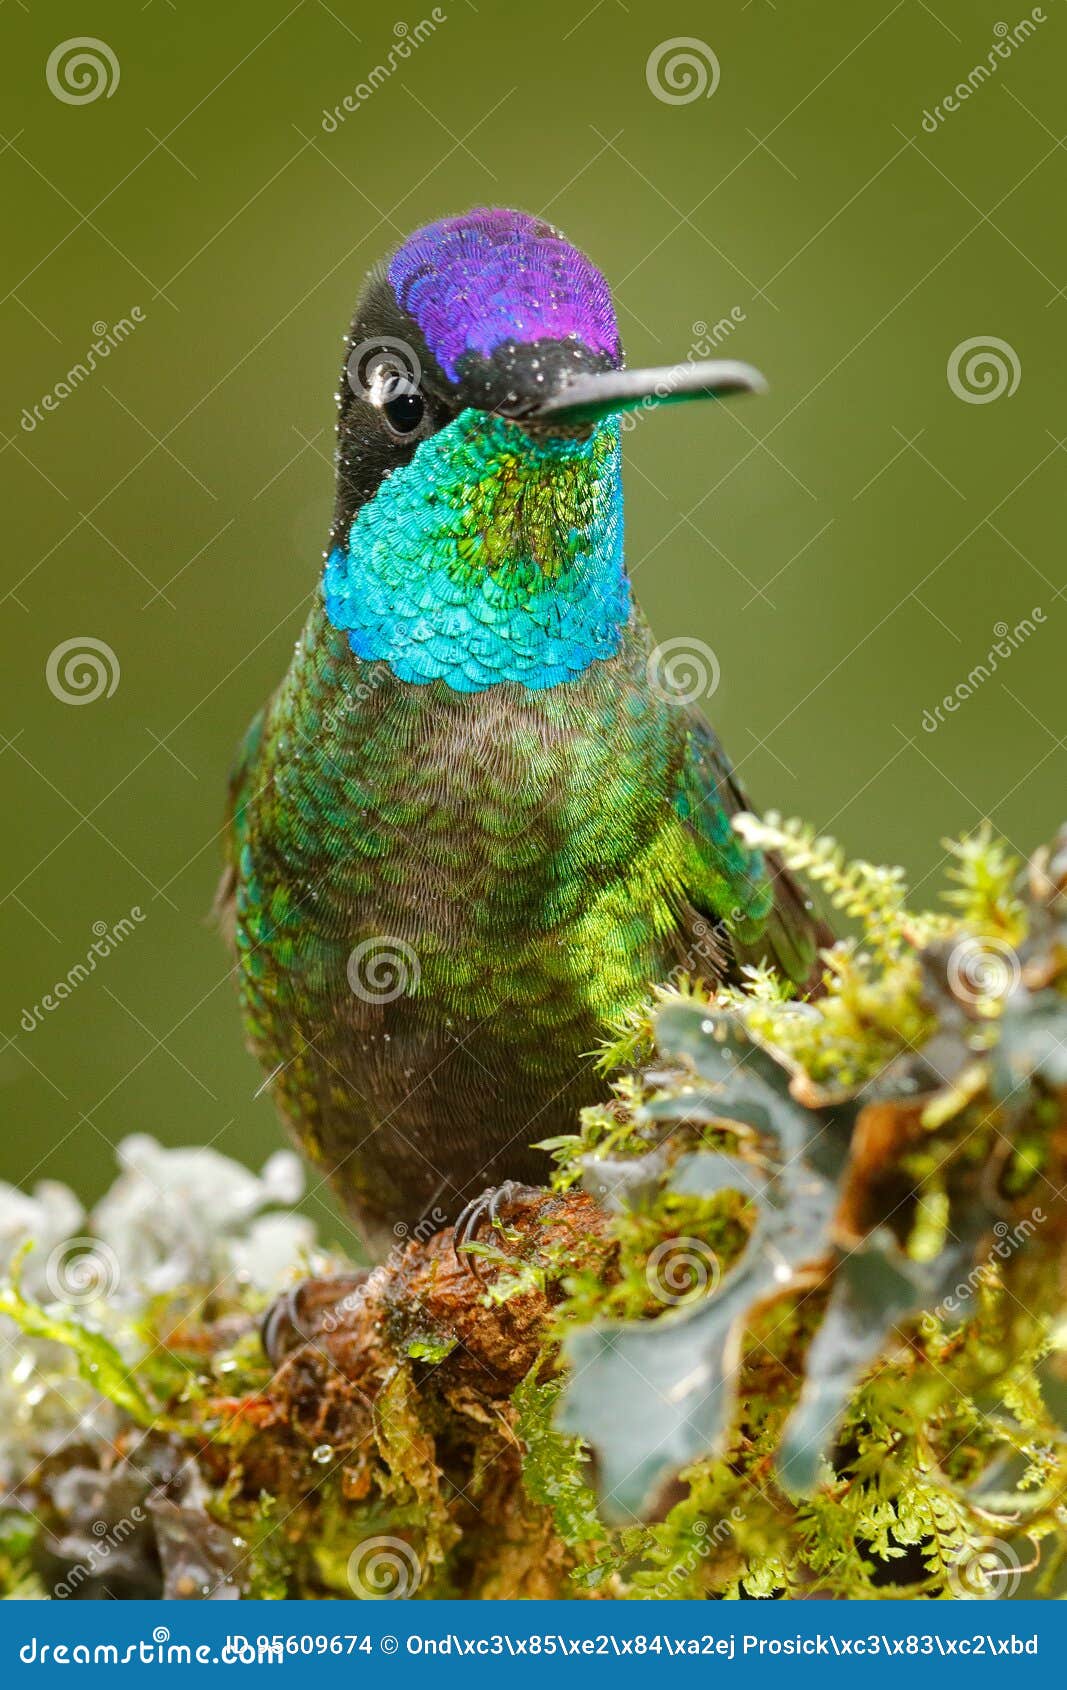 beautiful bird in the nature forest habitat. detail of shiny glossy bird. magnificent hummingbird, eugenes fulgens, nice bird on